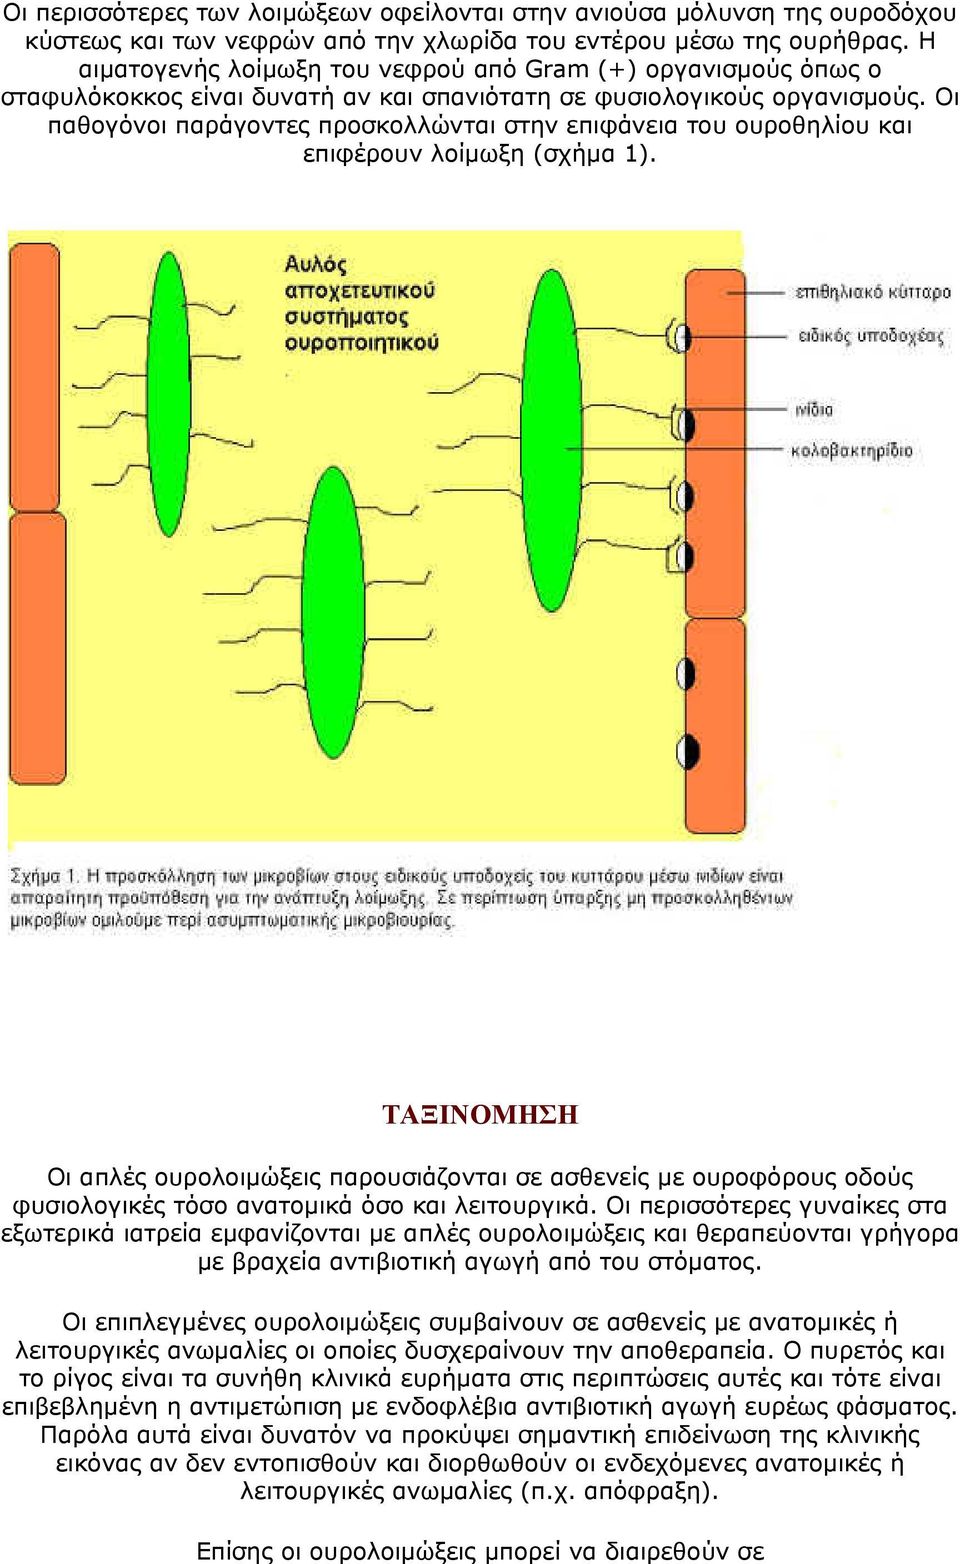 Oι παθογόνοι παράγοντες προσκολλώνται στην επιφάνεια του ουροθηλίου και επιφέρουν λοίμωξη (σχήμα 1).